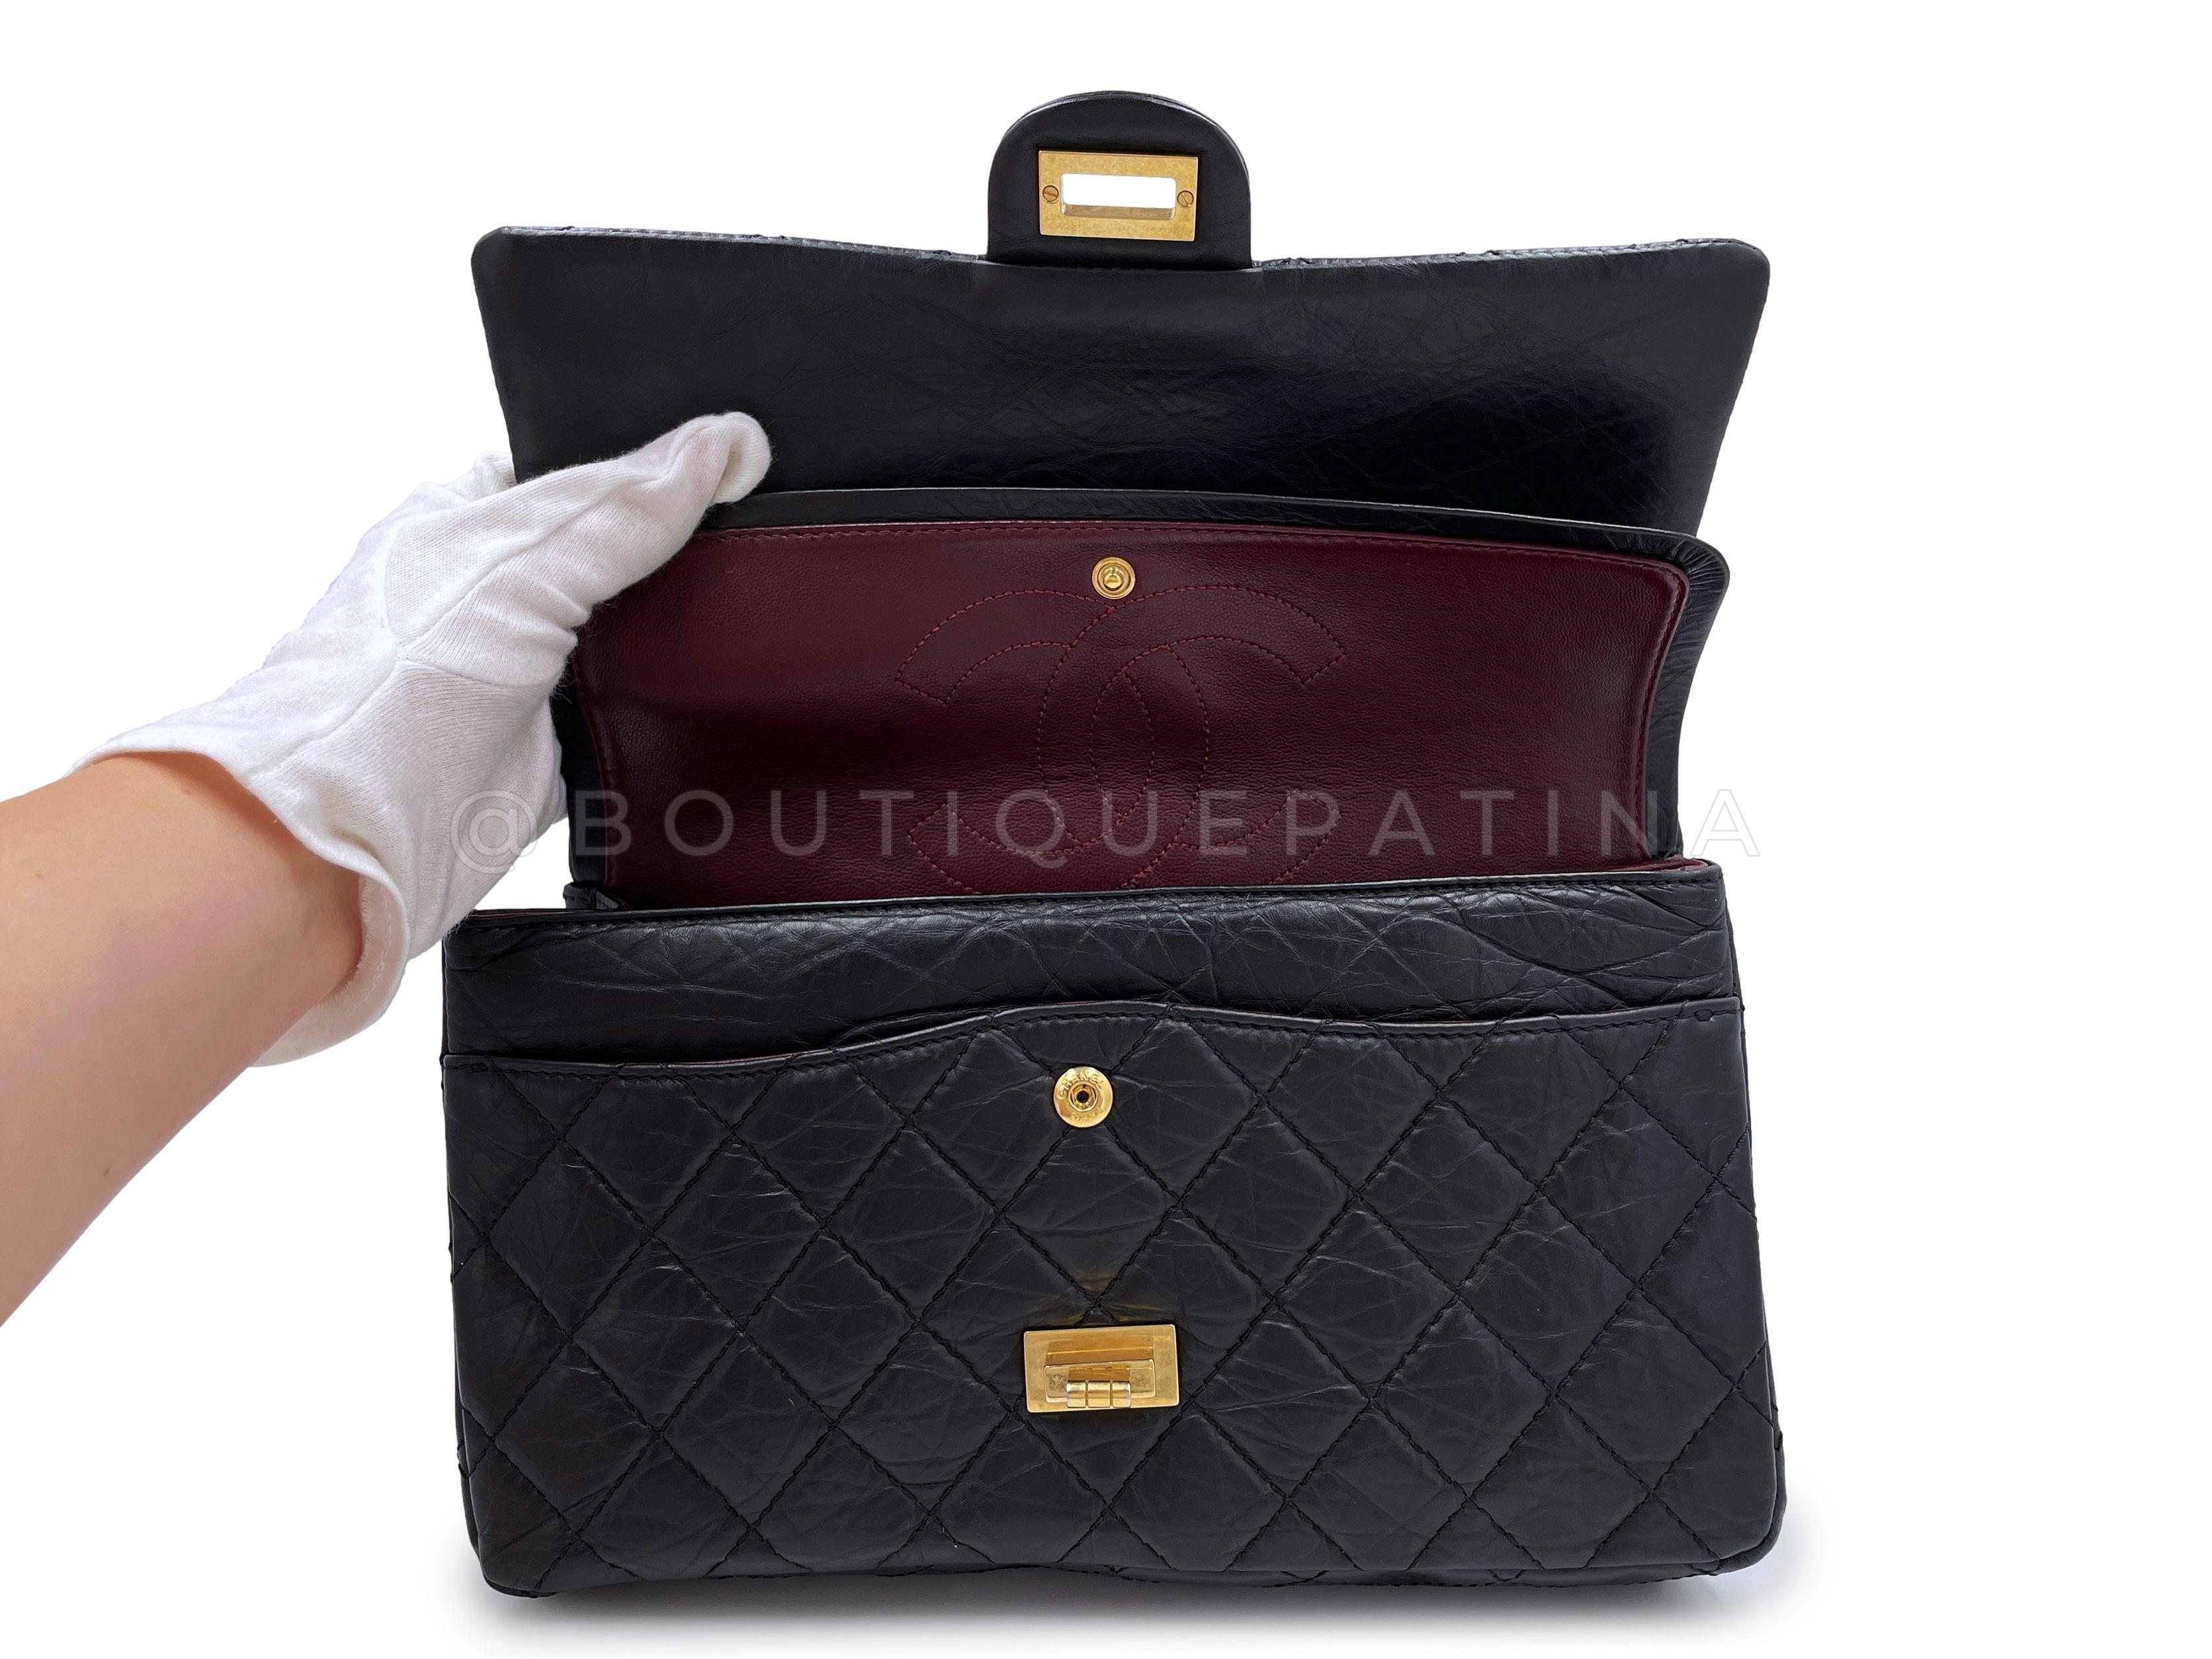 Chanel Black Aged Calfskin Reissue Medium 226 2.55 Flap Bag GHW 66864 For Sale 5